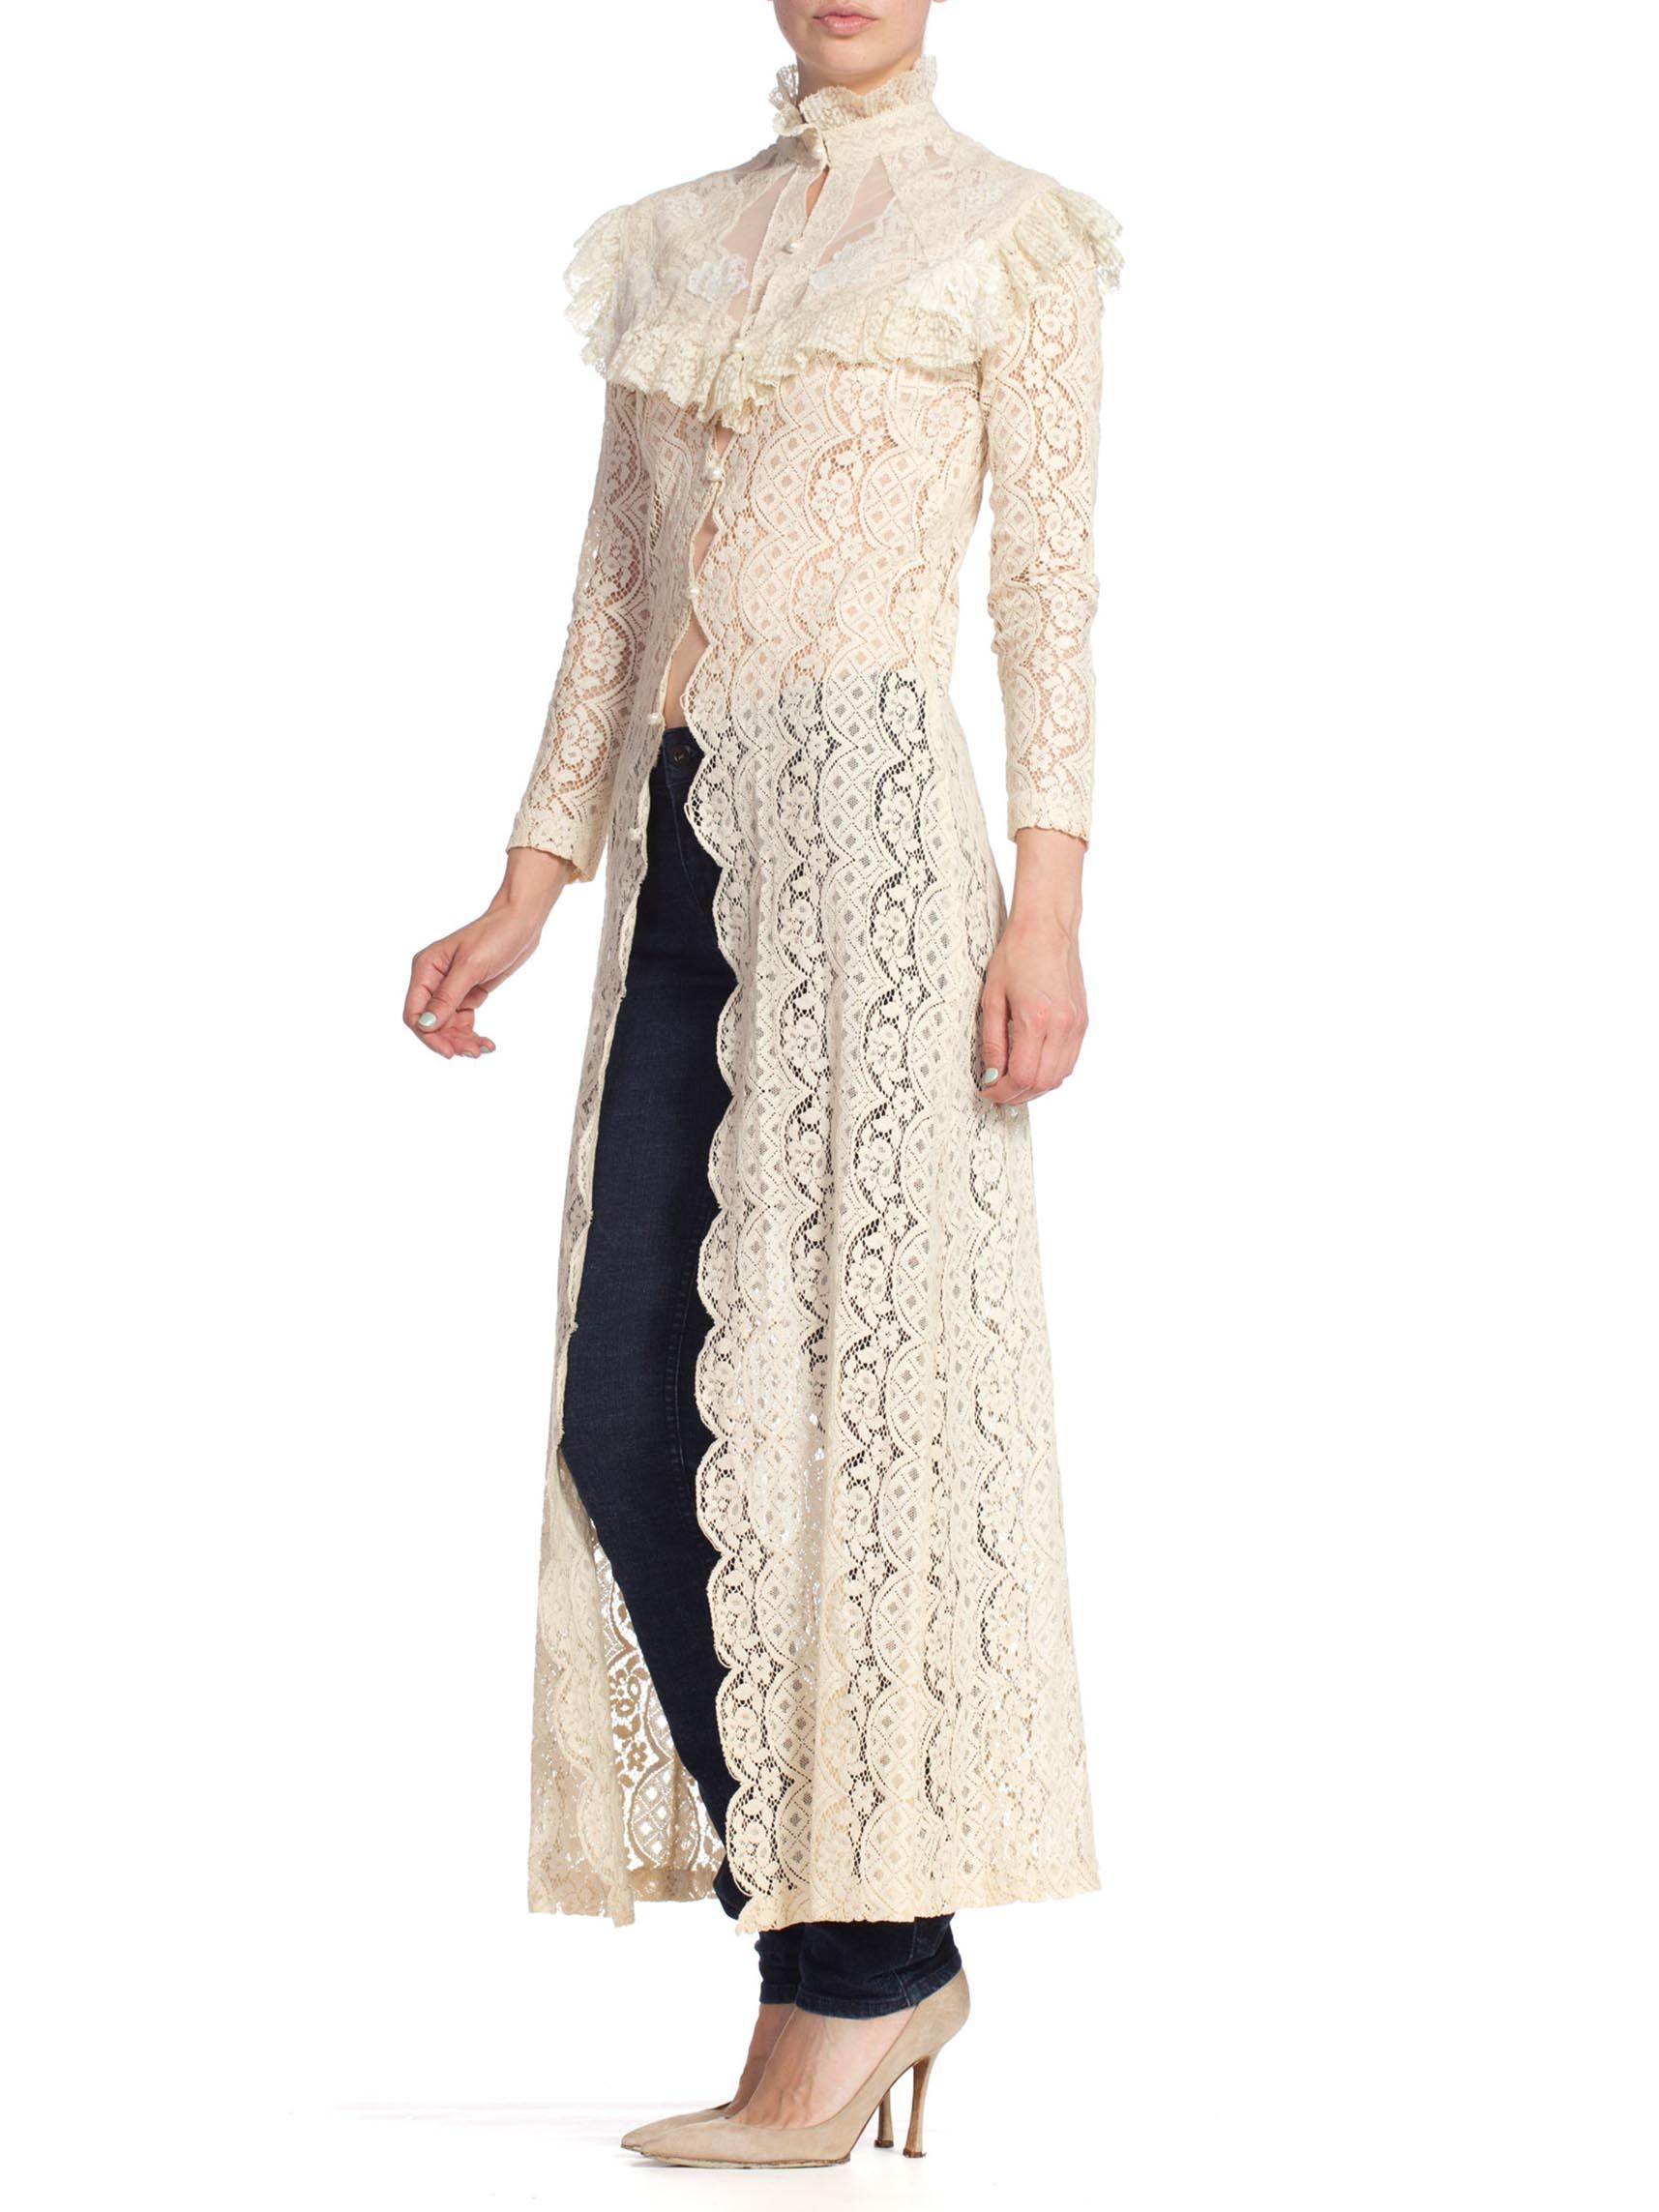 Women's 1970'S Ivory Cotton Lace Victorian Revival Duster Dress